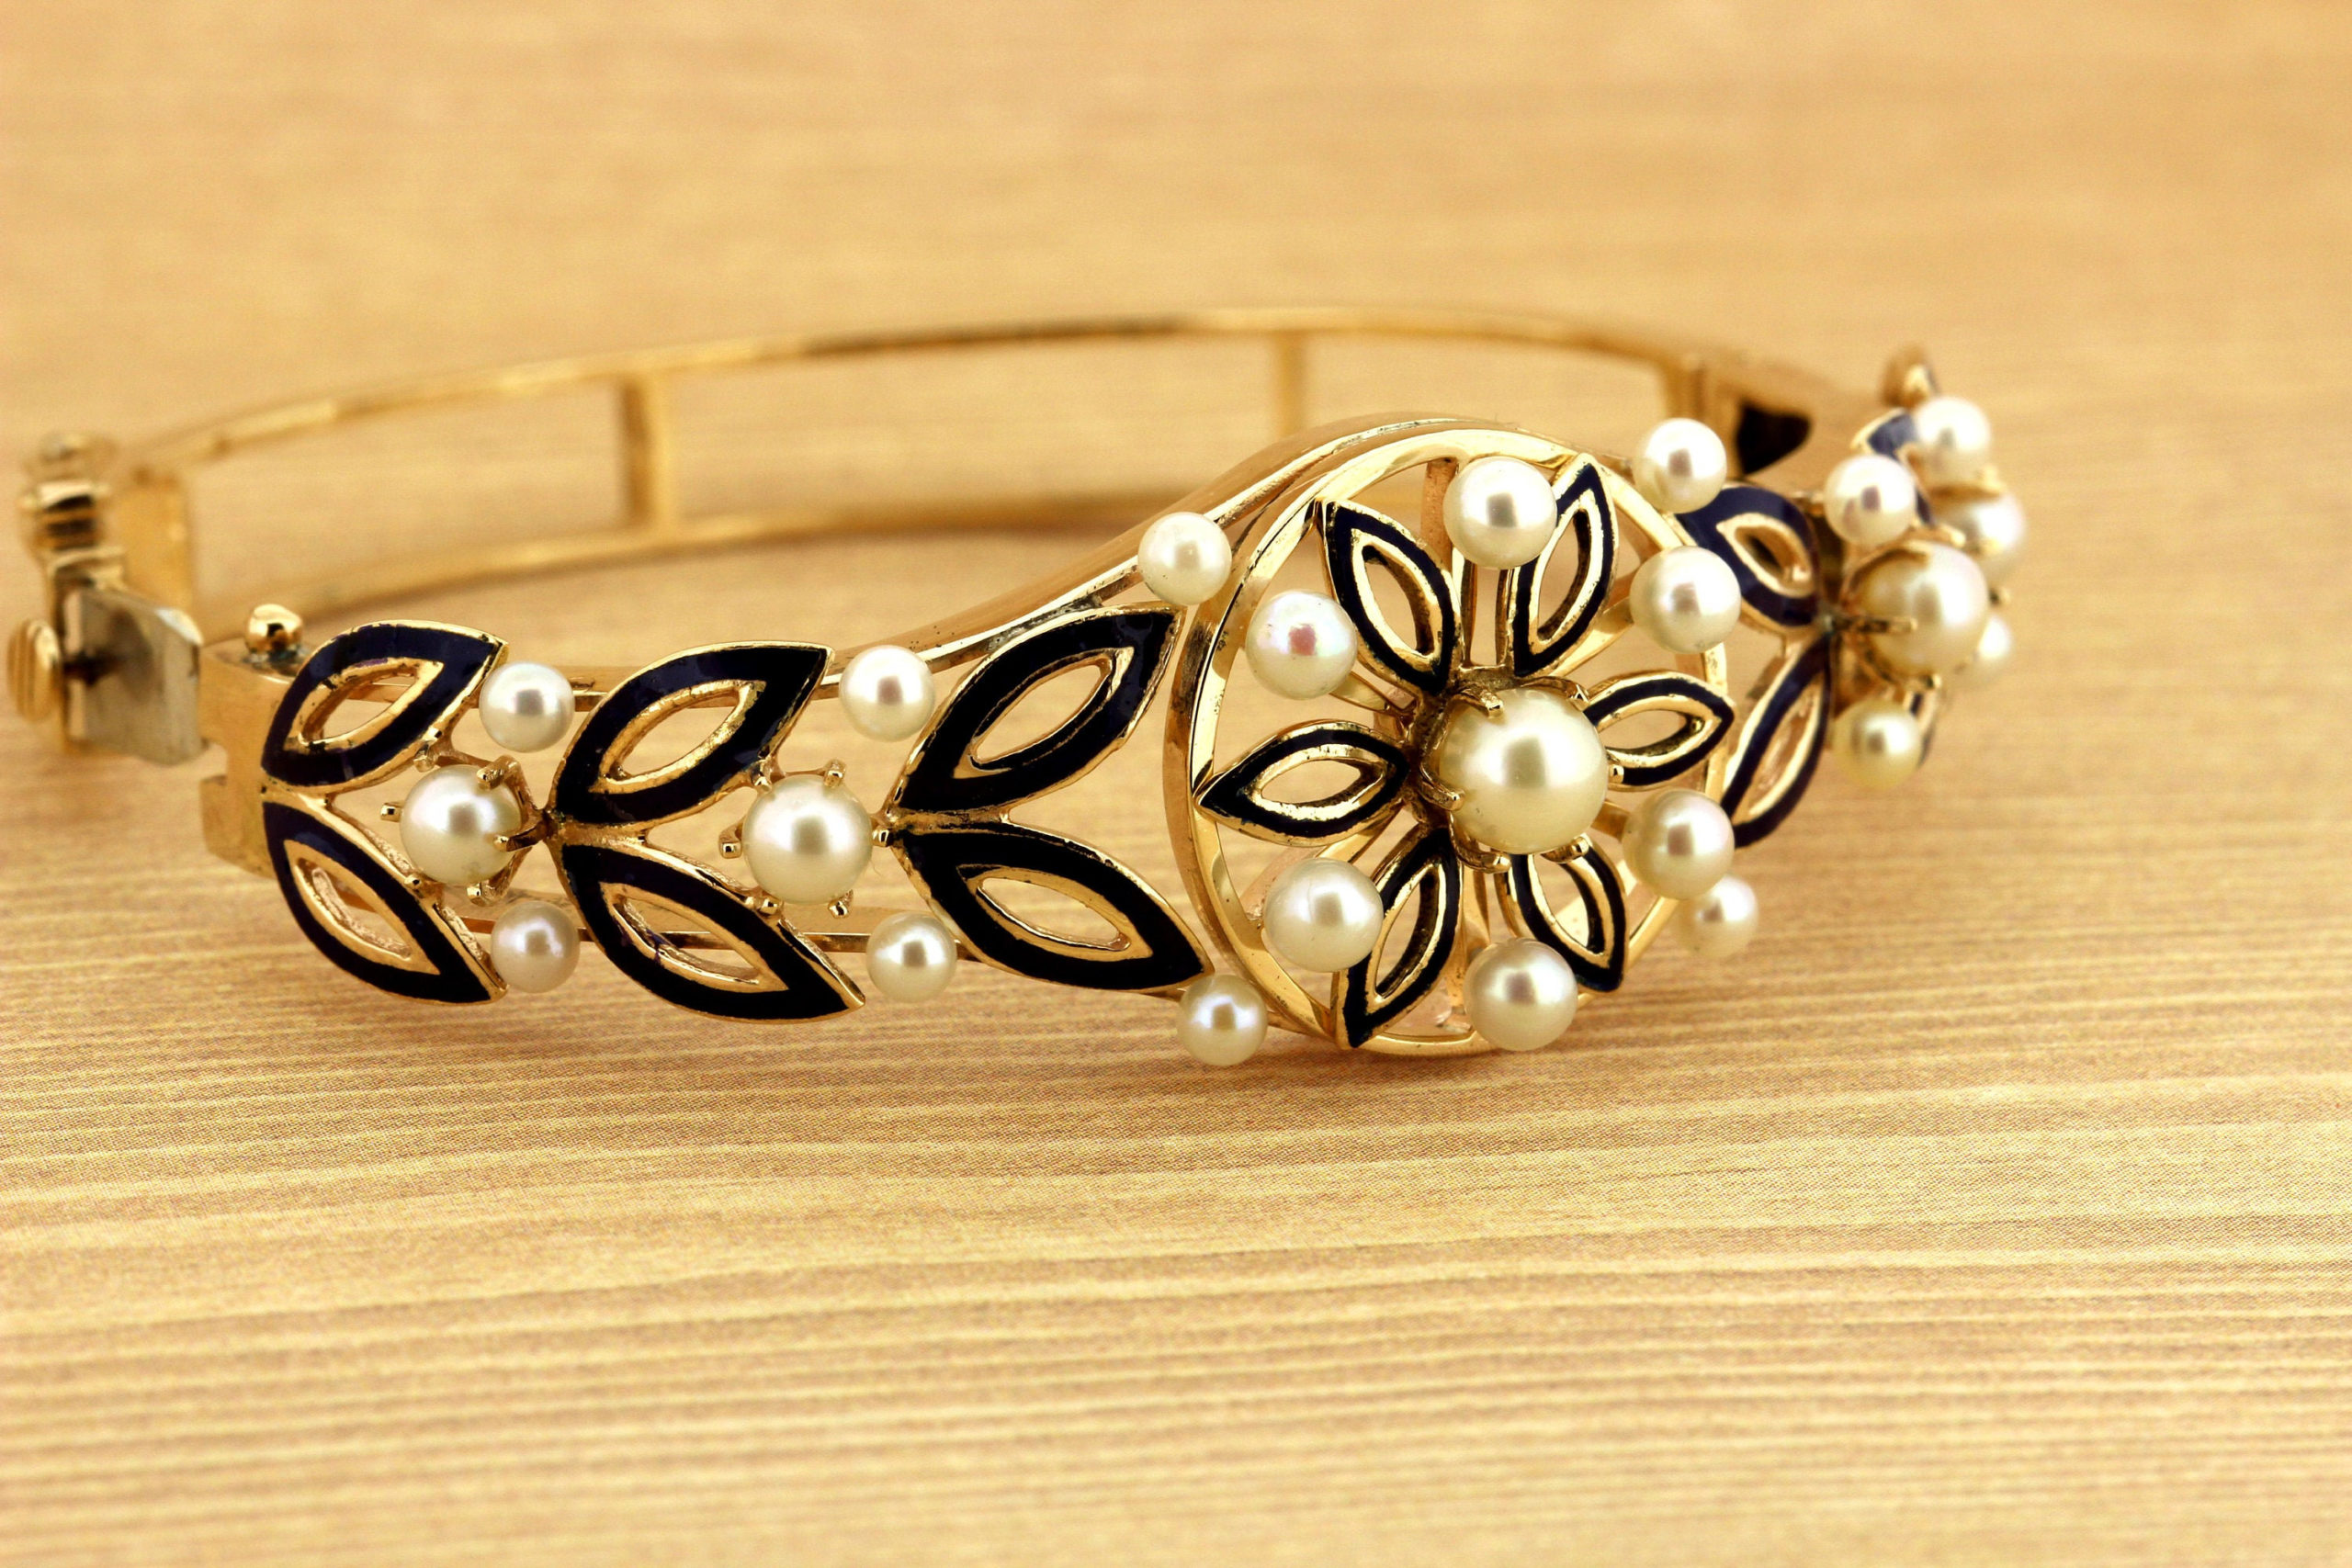 Blossom yellow gold bracelet